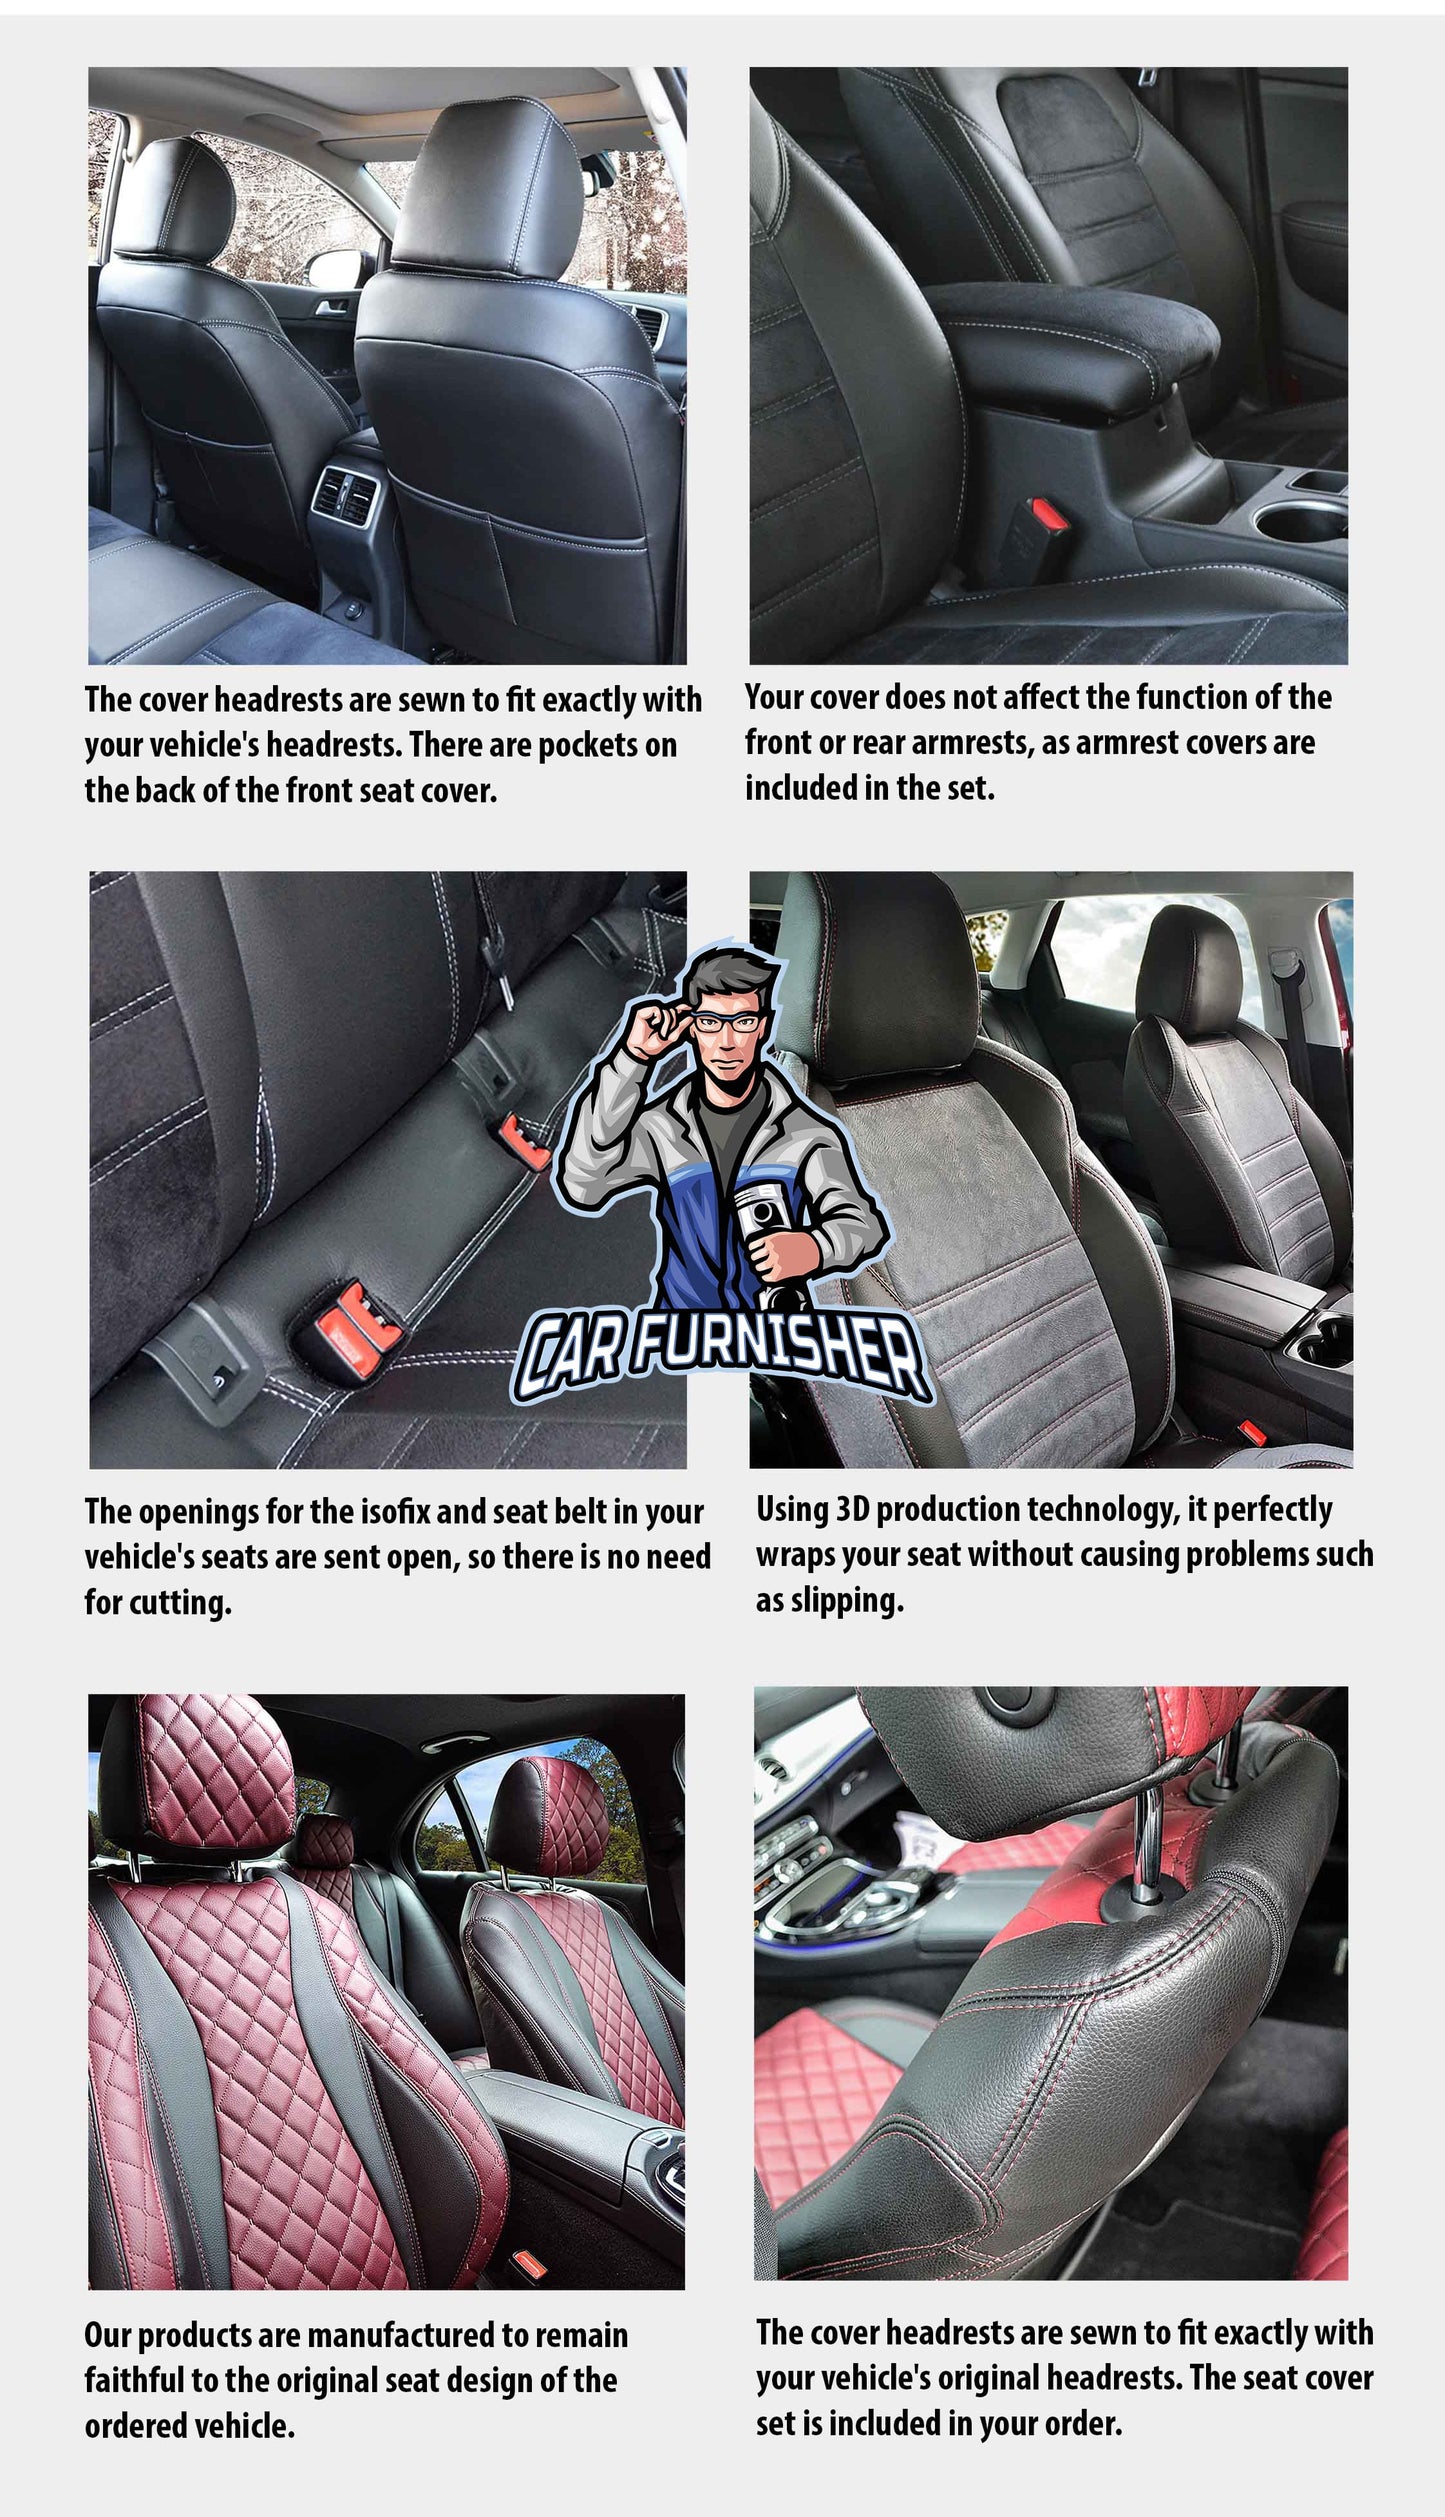 Hyundai Matrix Seat Covers Istanbul Leather Design Smoked Black Leather